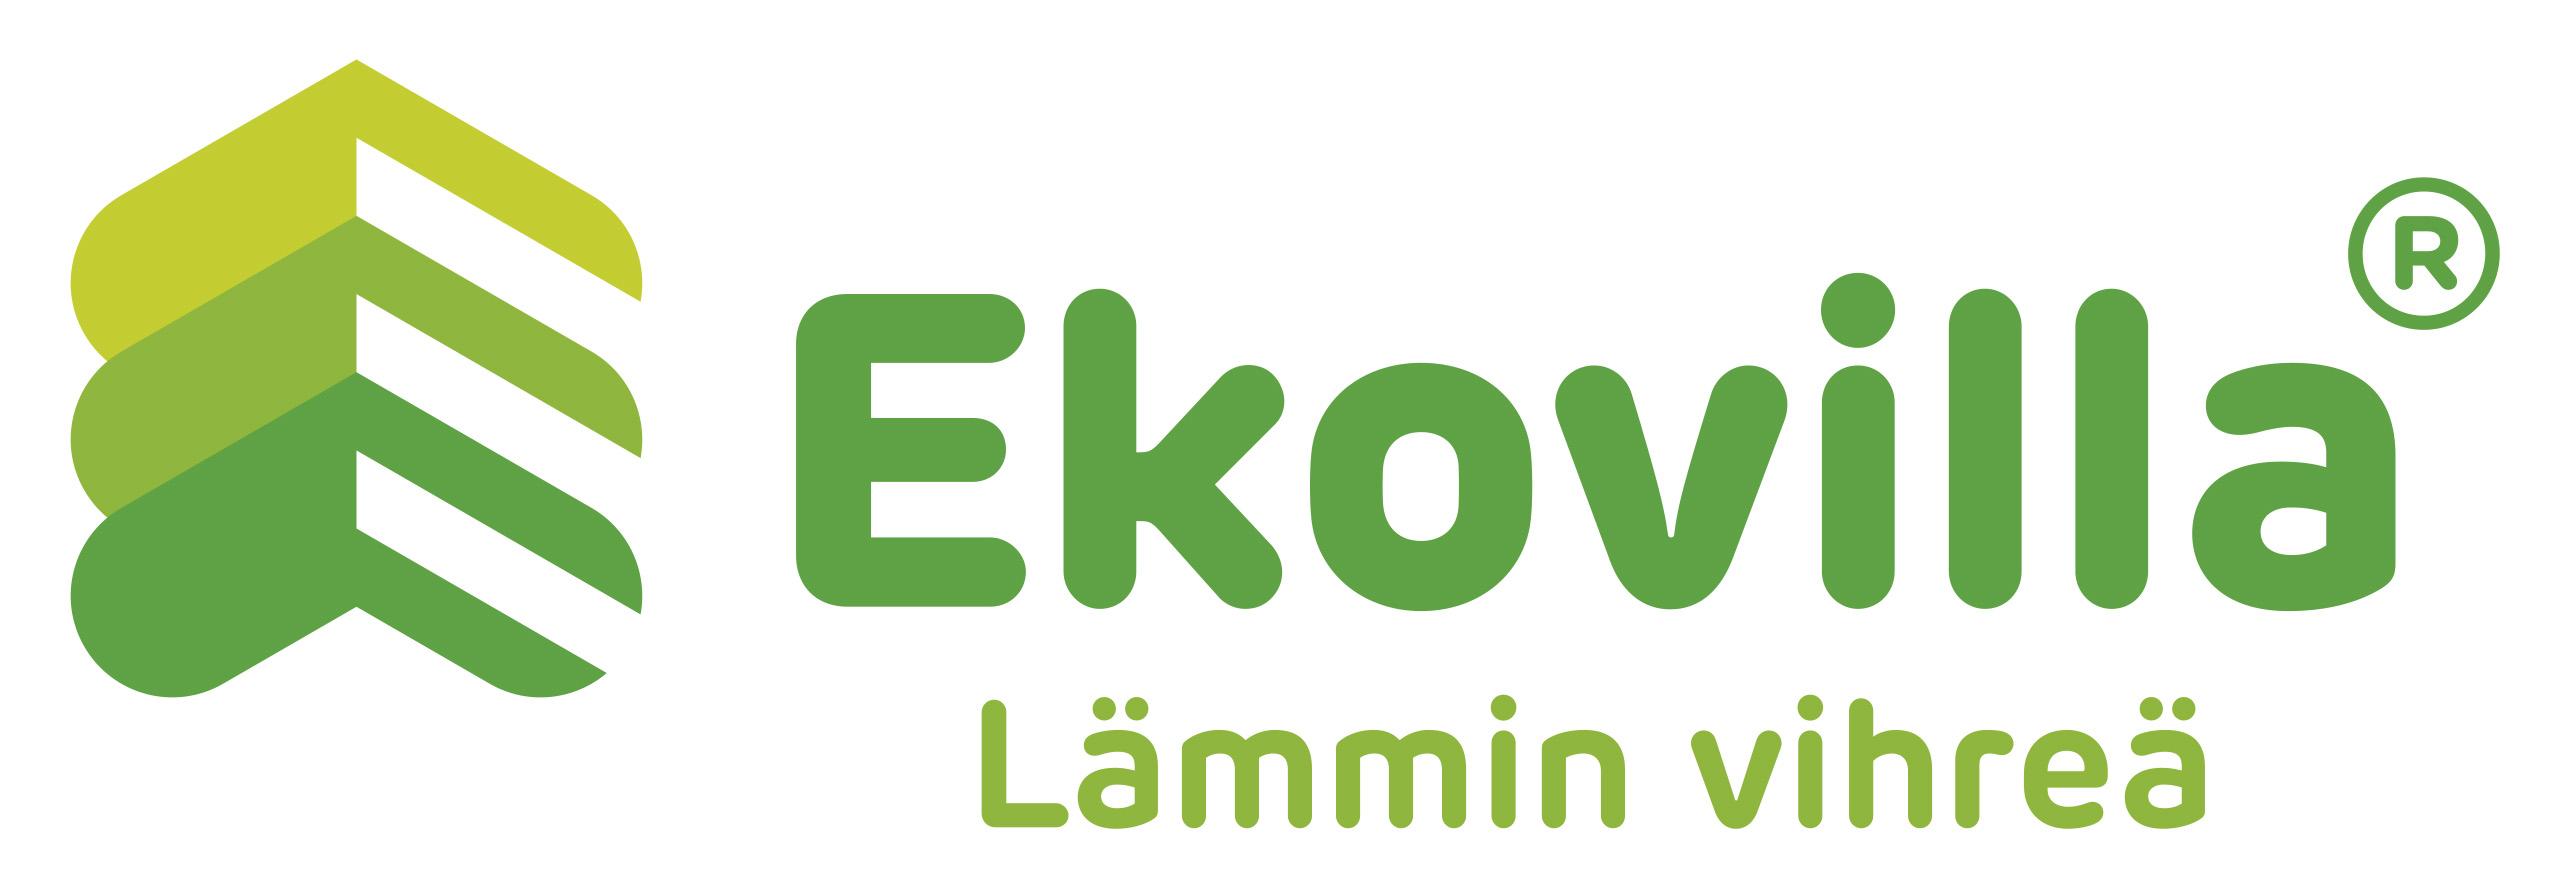 Ekovilla-logo_slogan_CMYK-outlined